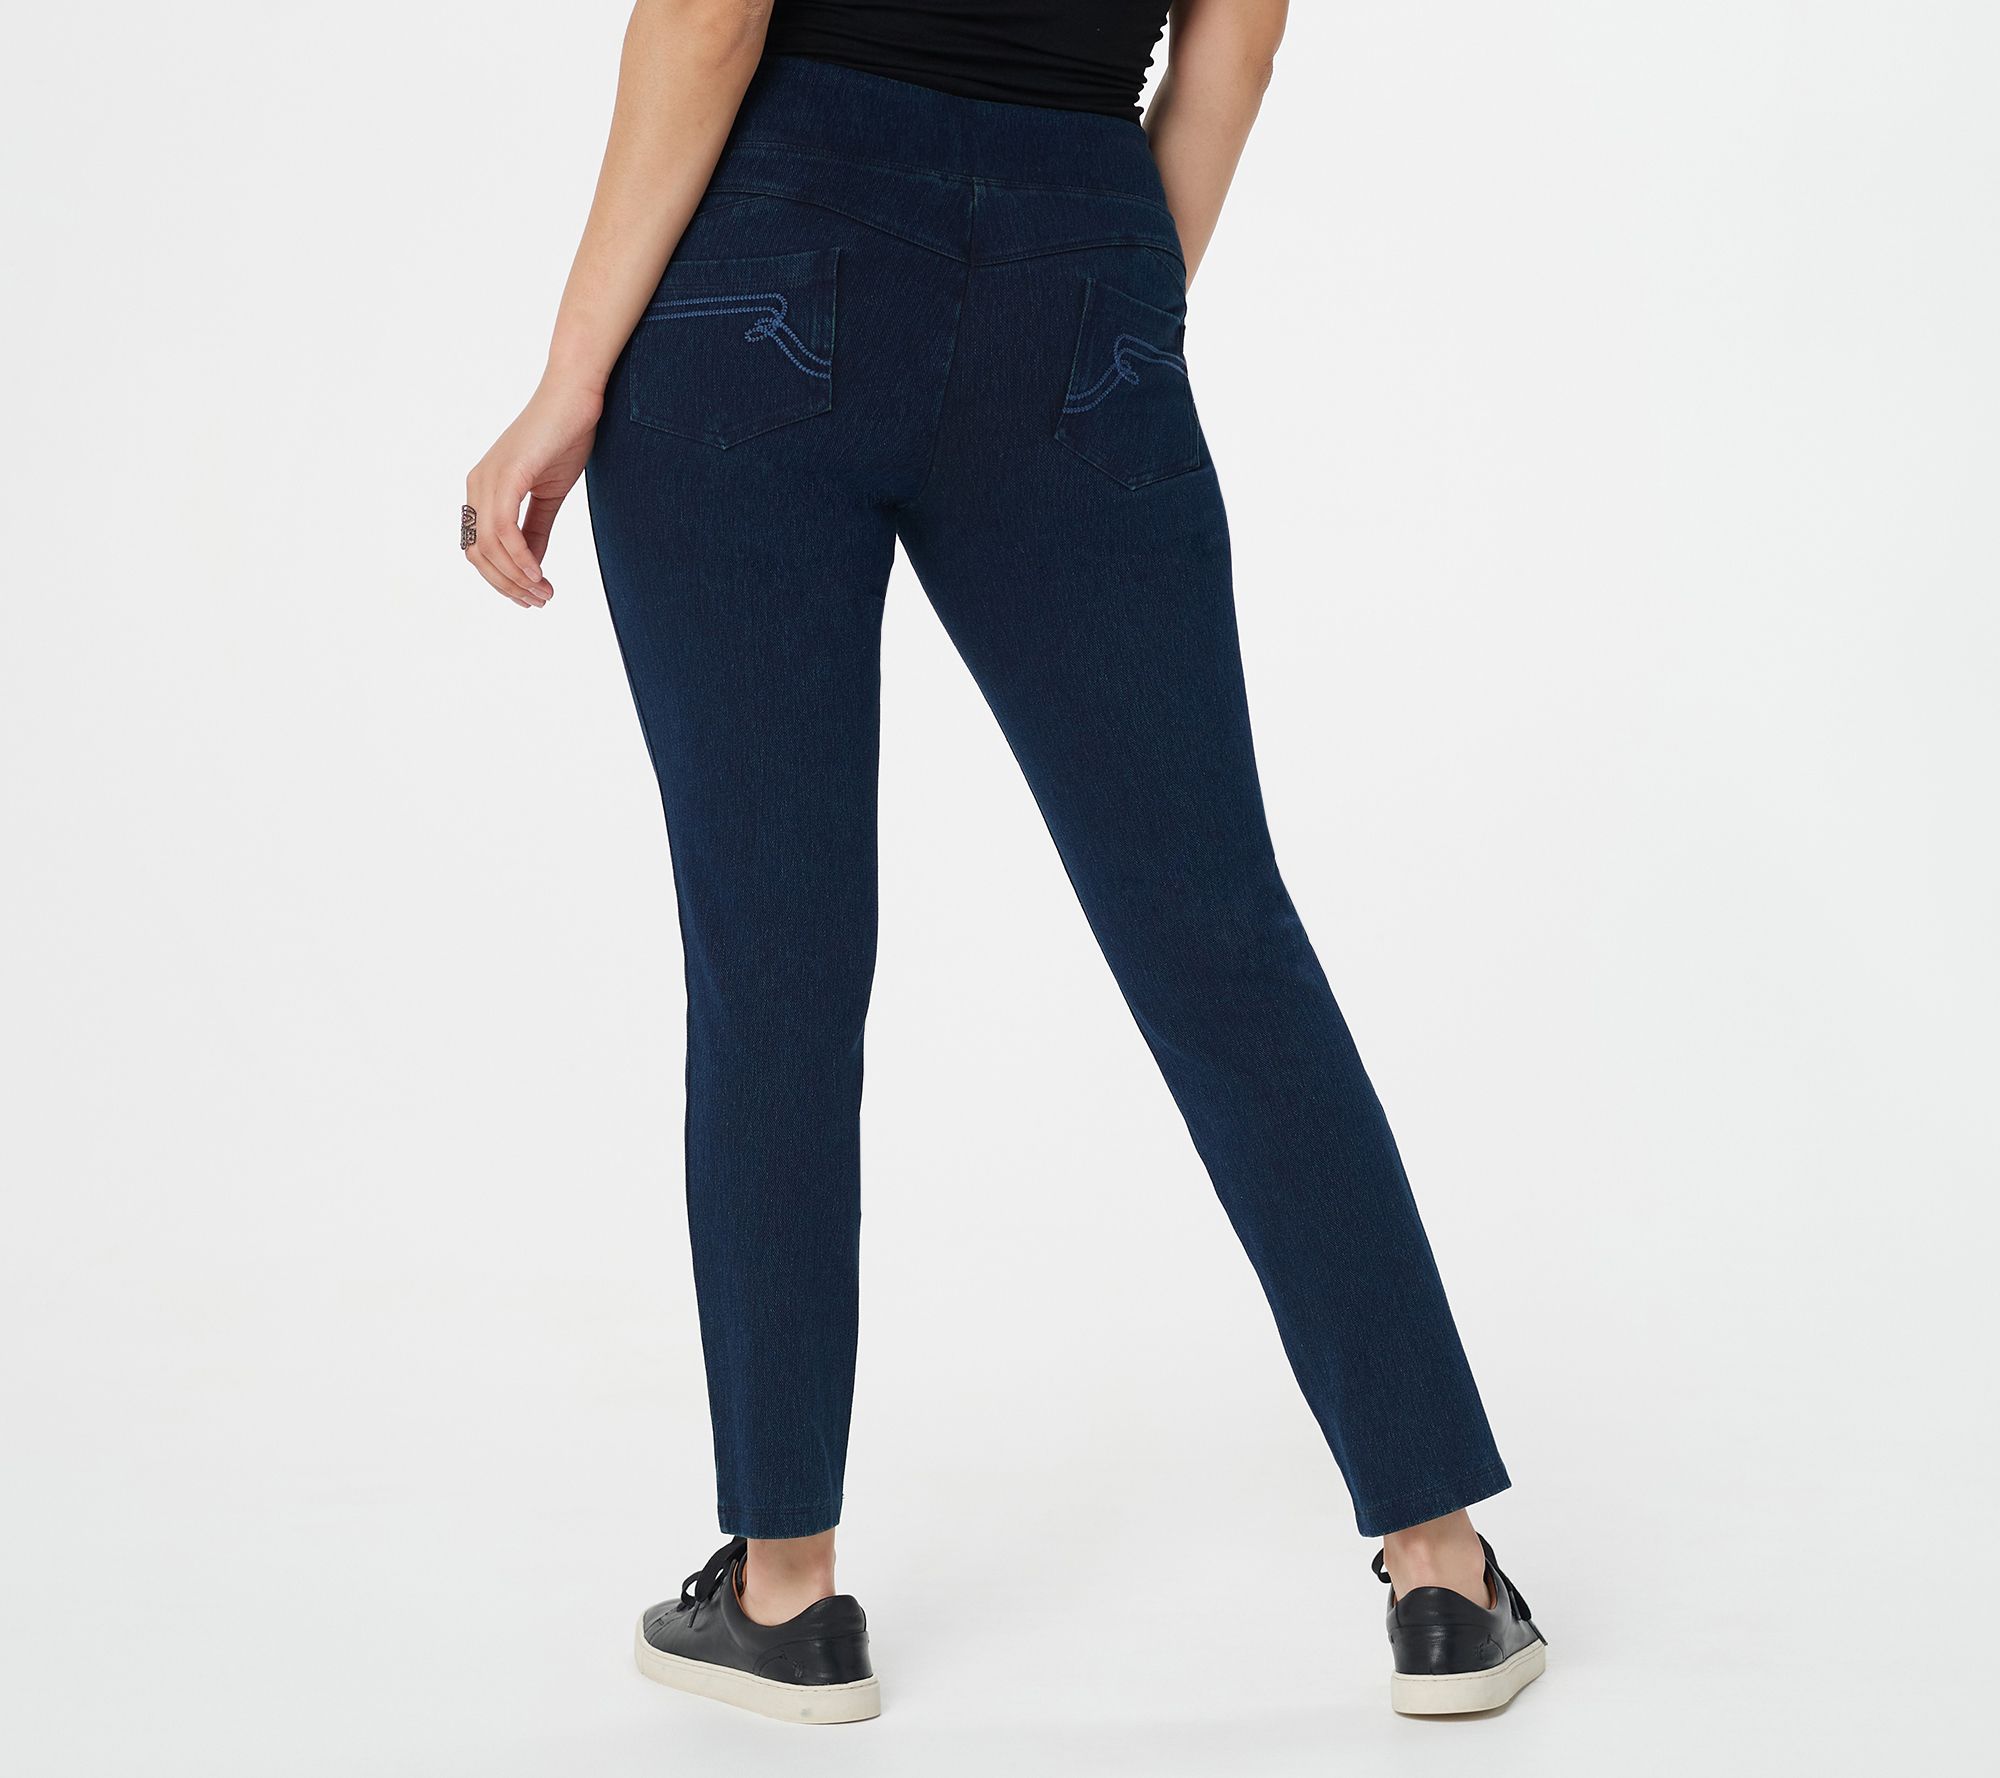 Womens Elasticated Waist Tummy Control Jeans in Dark Blue